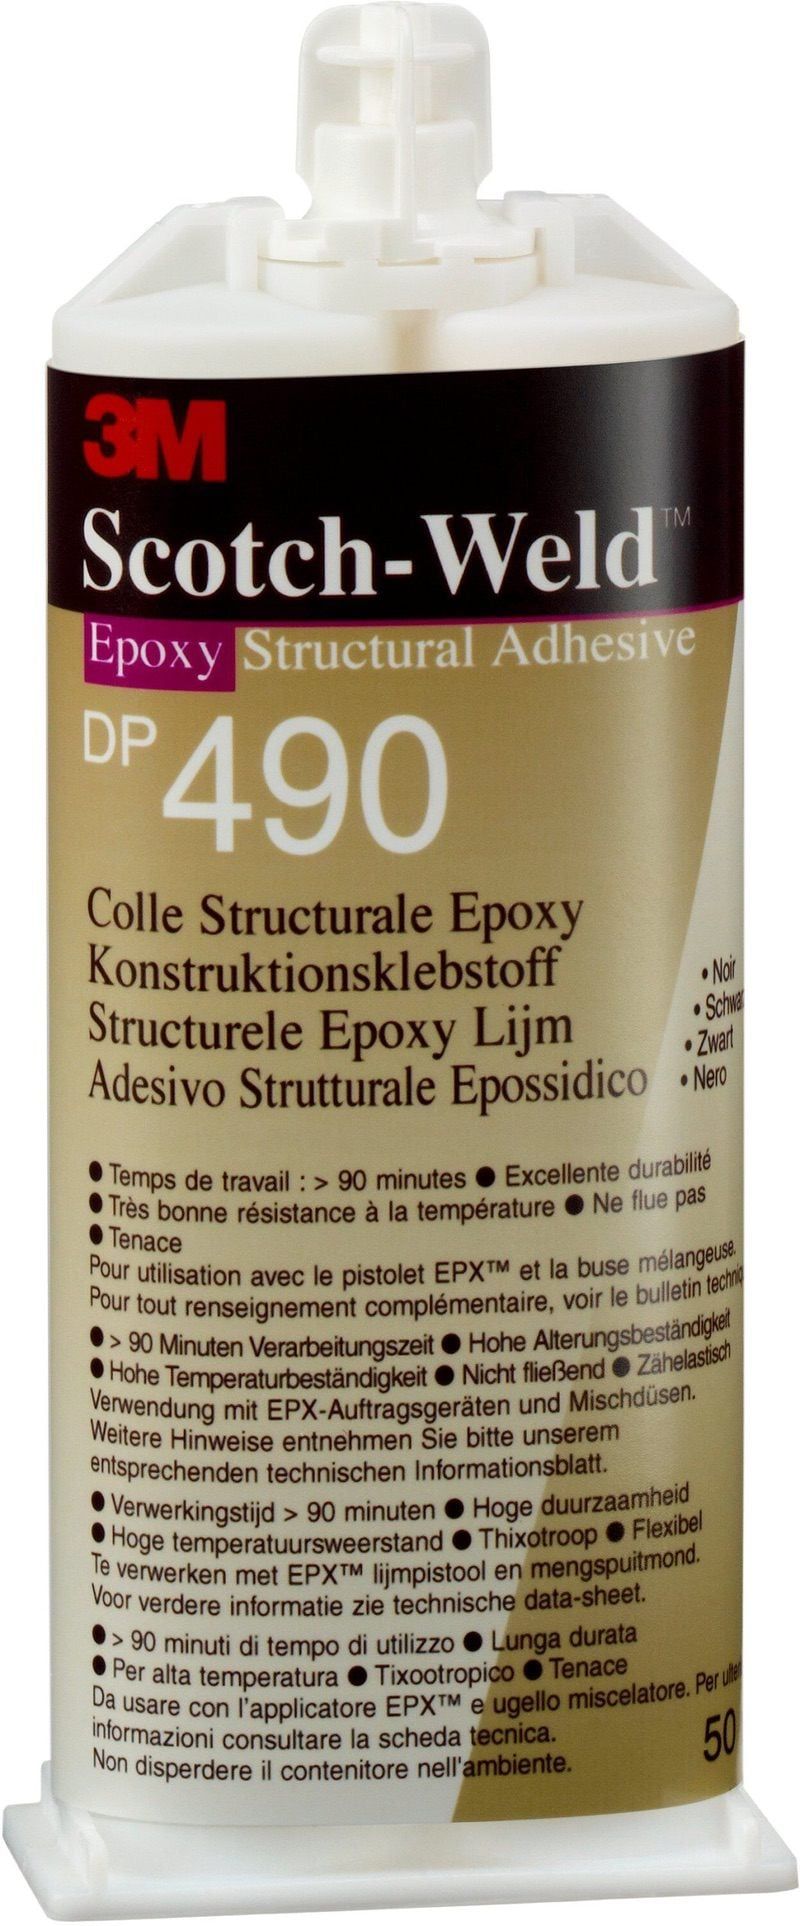 3M™ Scotch-Weld™ Epoxy Adhesive DP490, Black, 50 ml, Label2